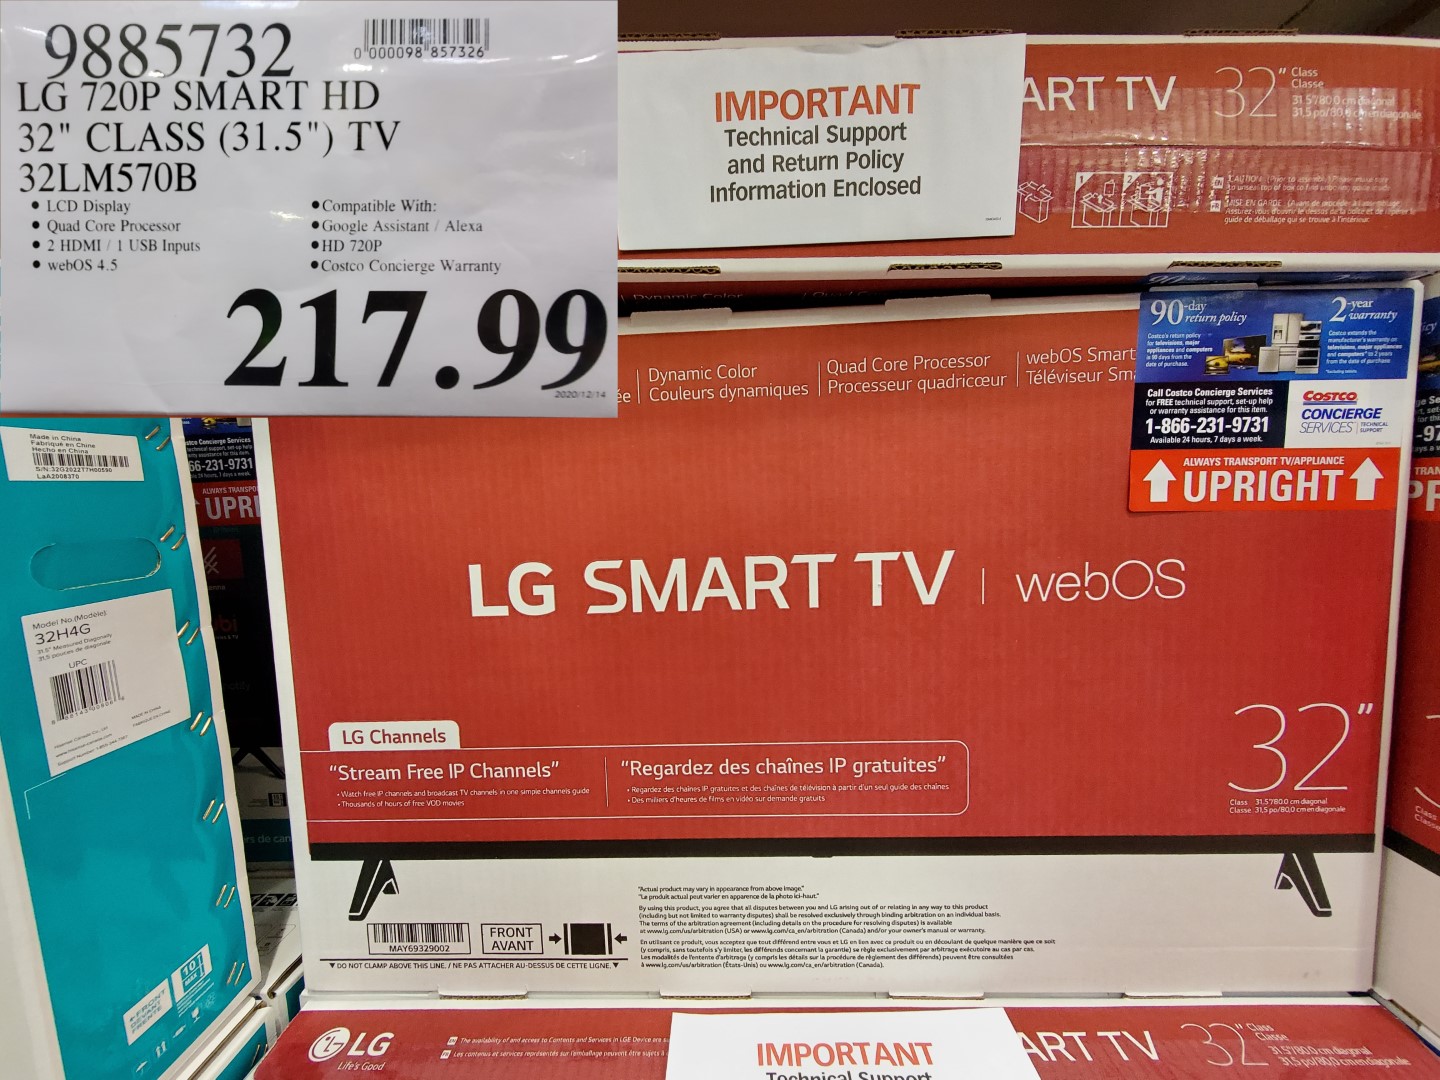 LG smart TV 32"